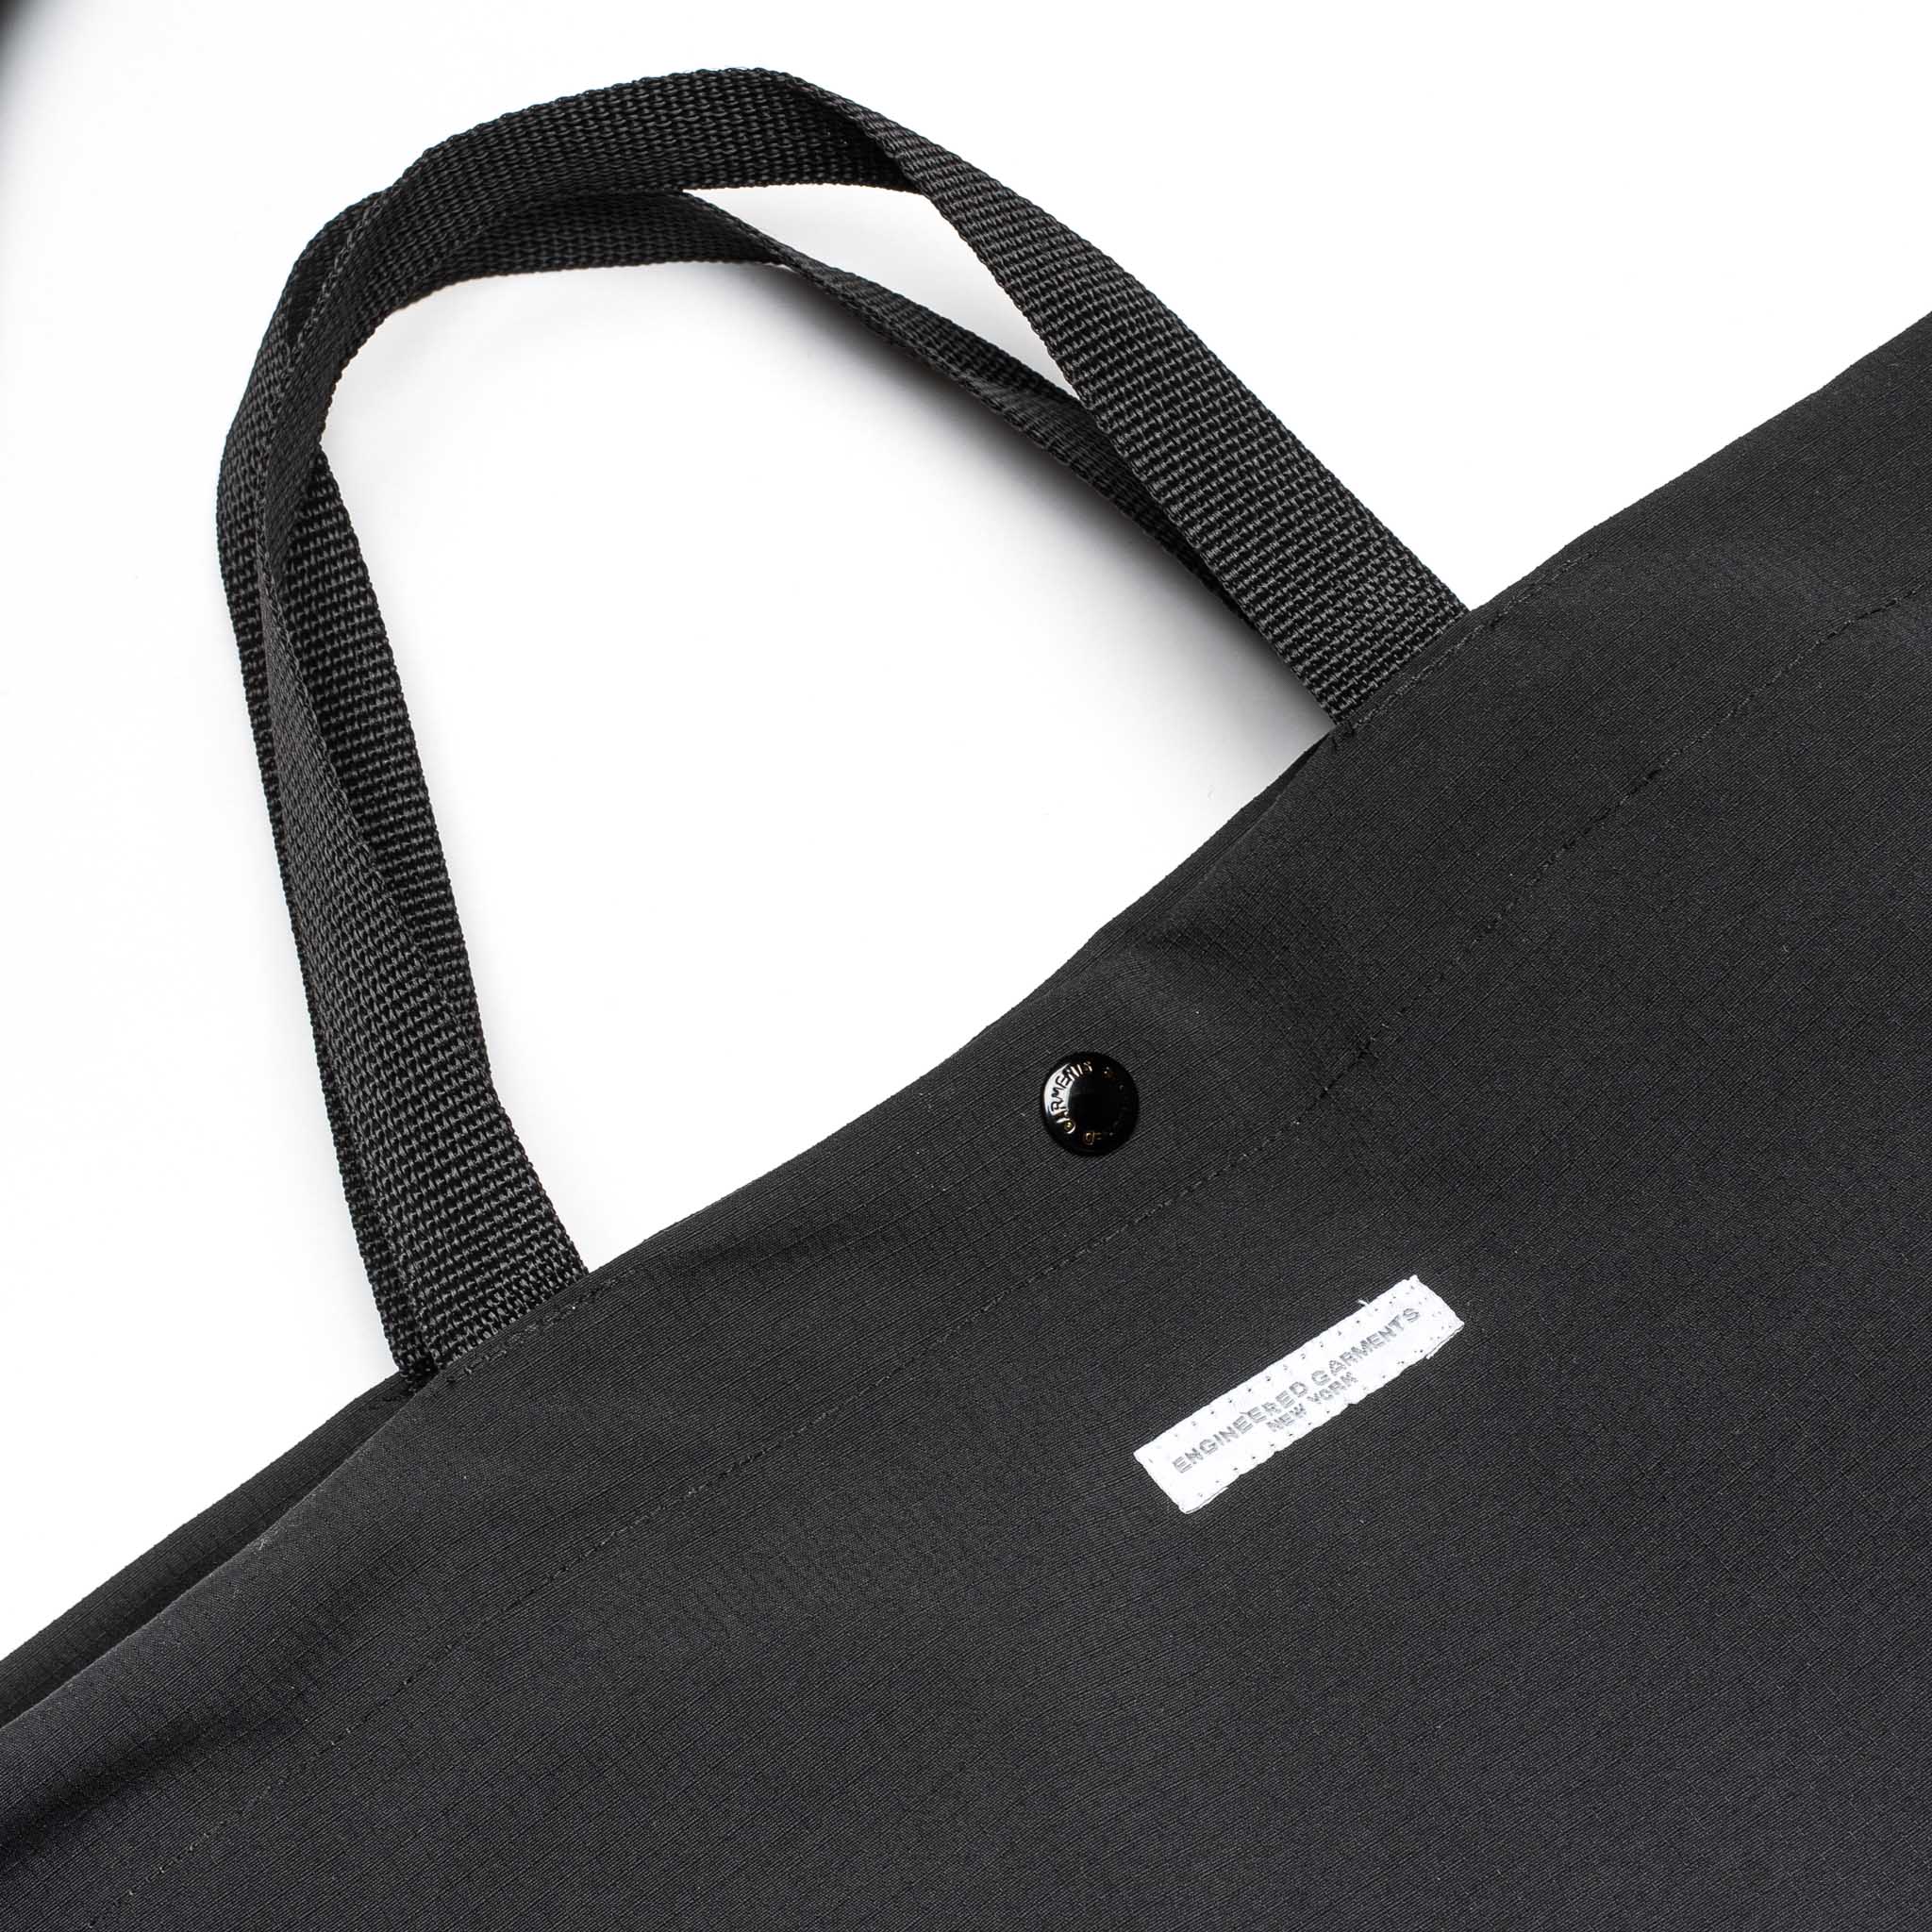 Ikeas Frakta tote bag gets turned into a sneaker